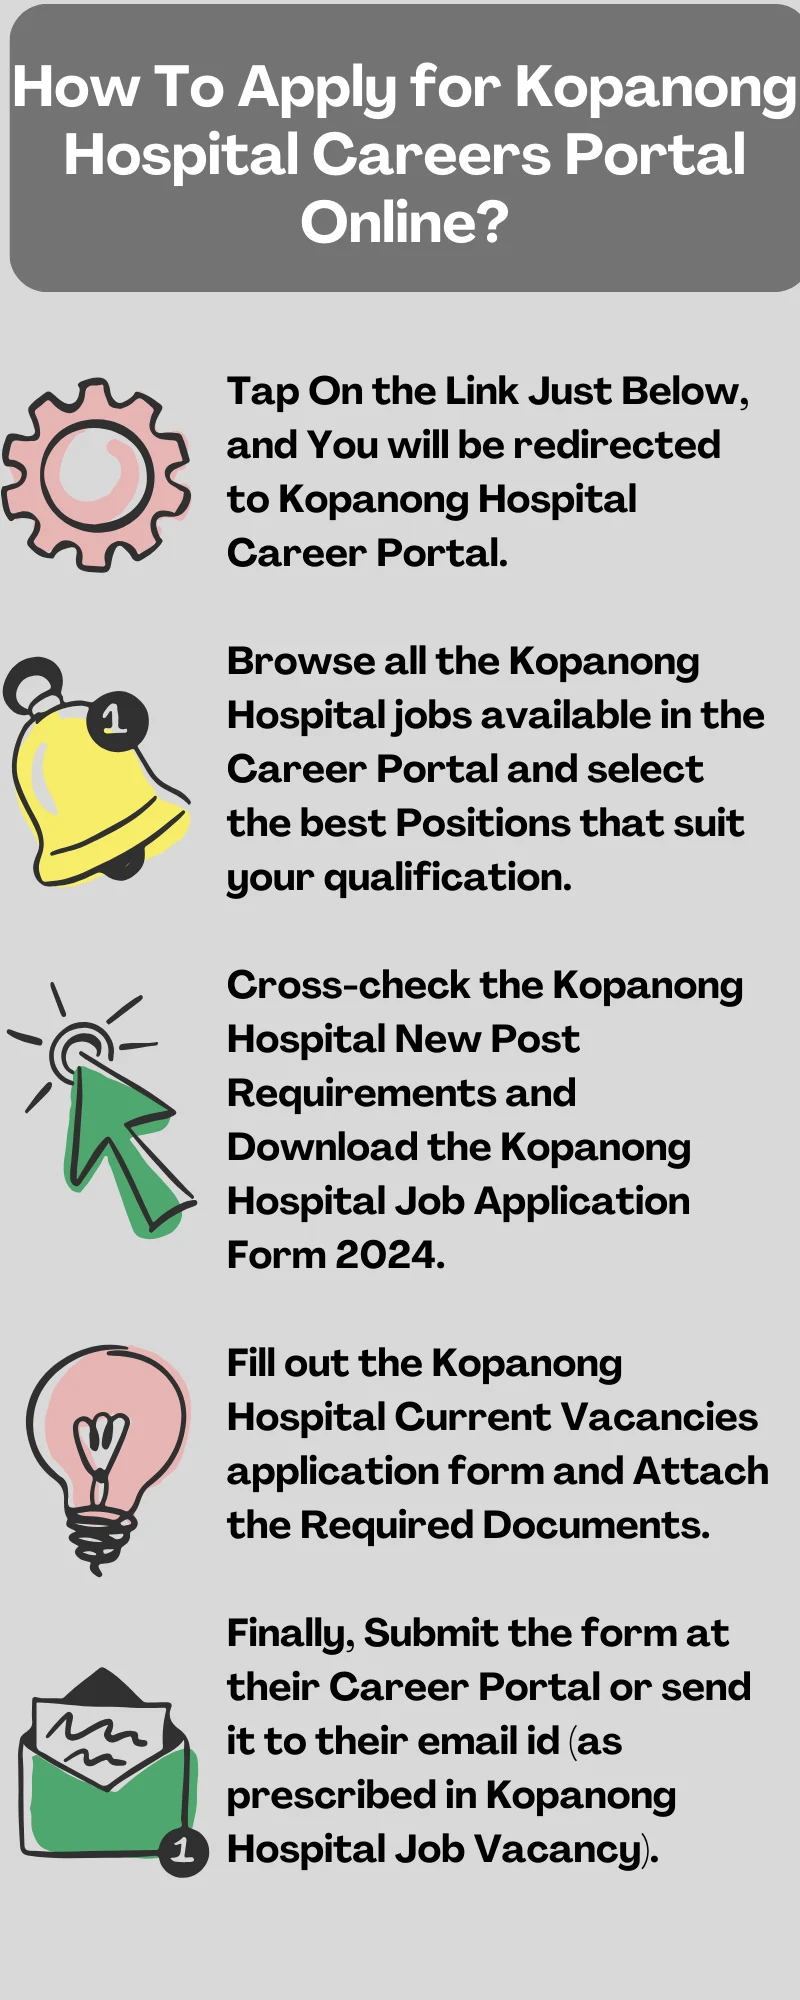 How To Apply for Kopanong Hospital Careers Portal Online?